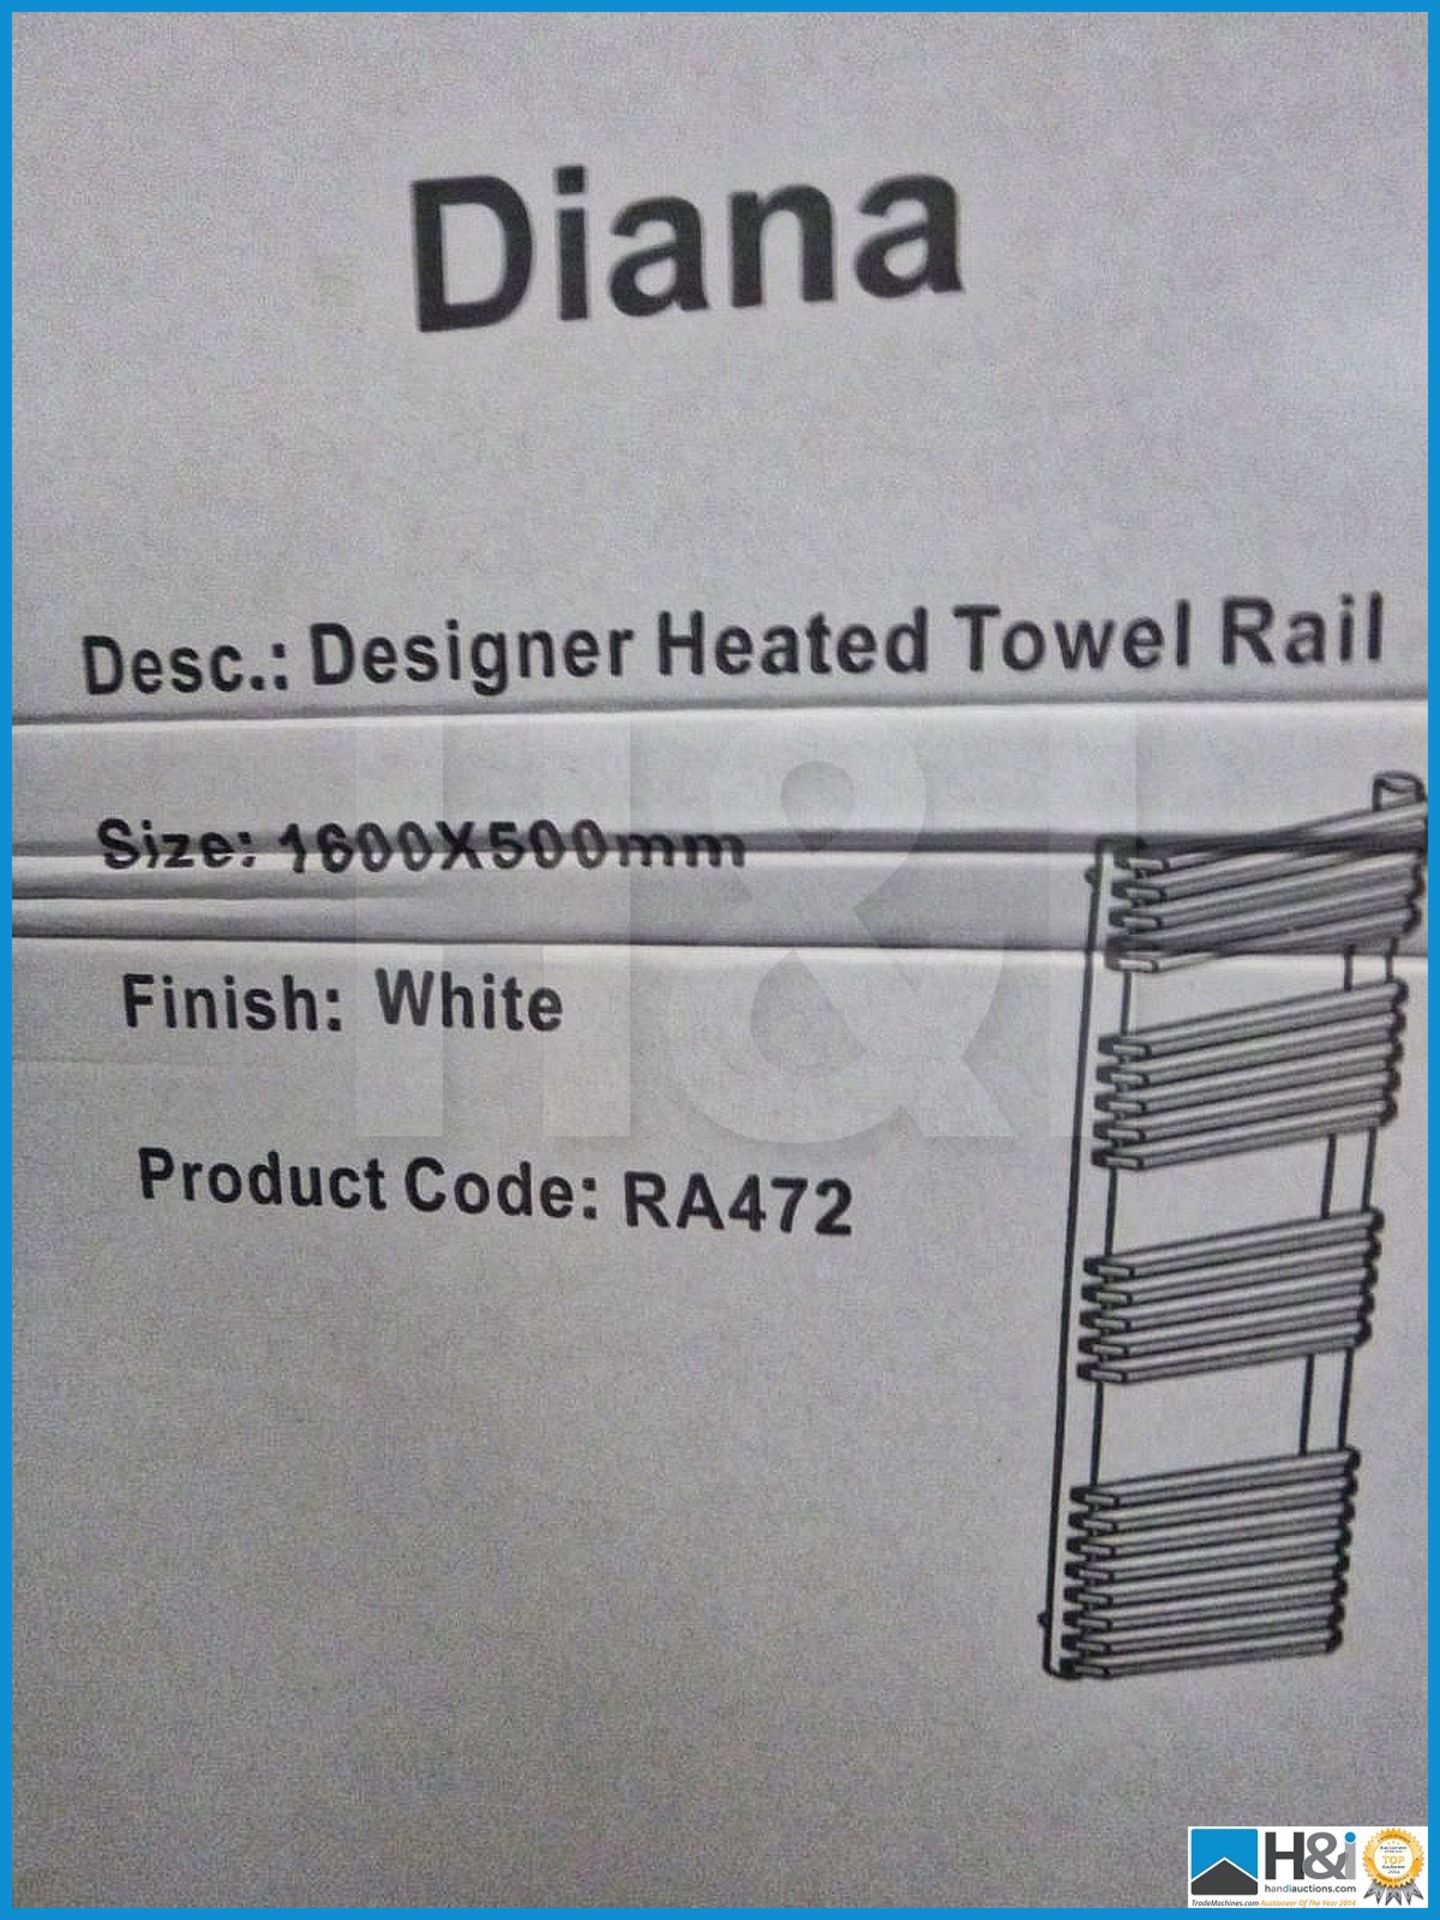 Diana designer heated towel rail white 1600mm X 500mm. - Image 3 of 3